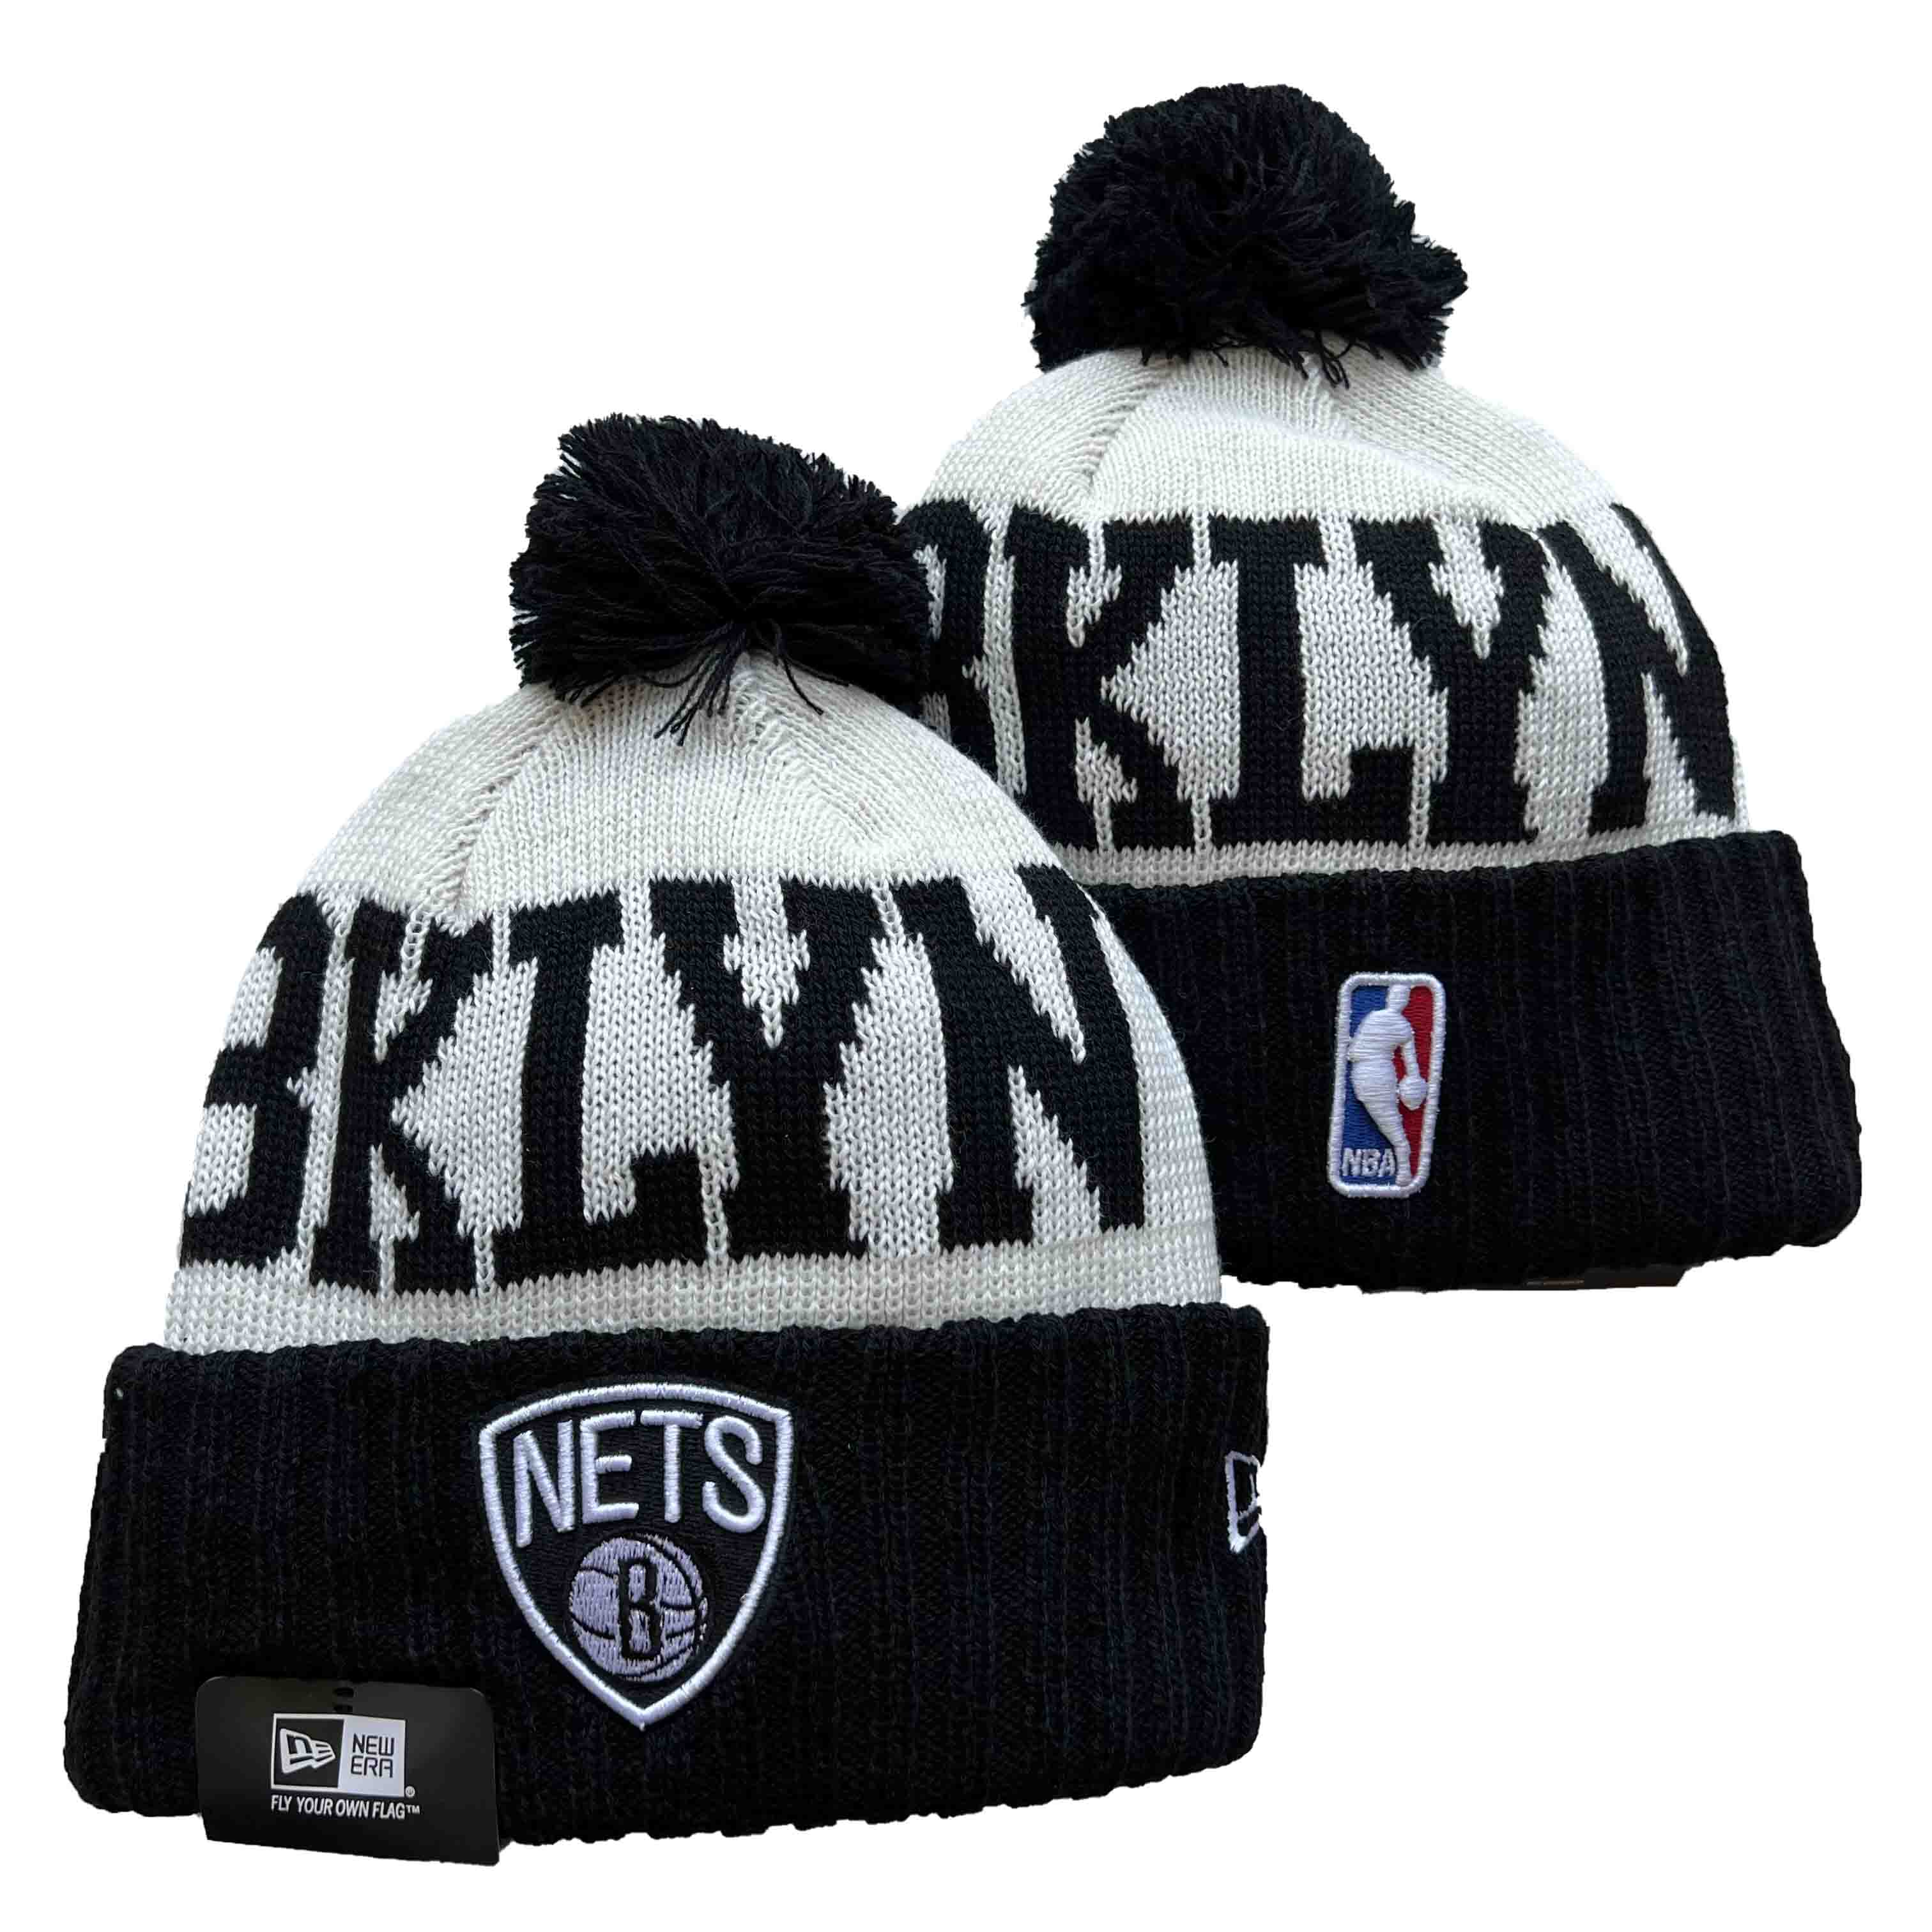 NBA Brooklyn Nets Beanies Knit Hats-YD485